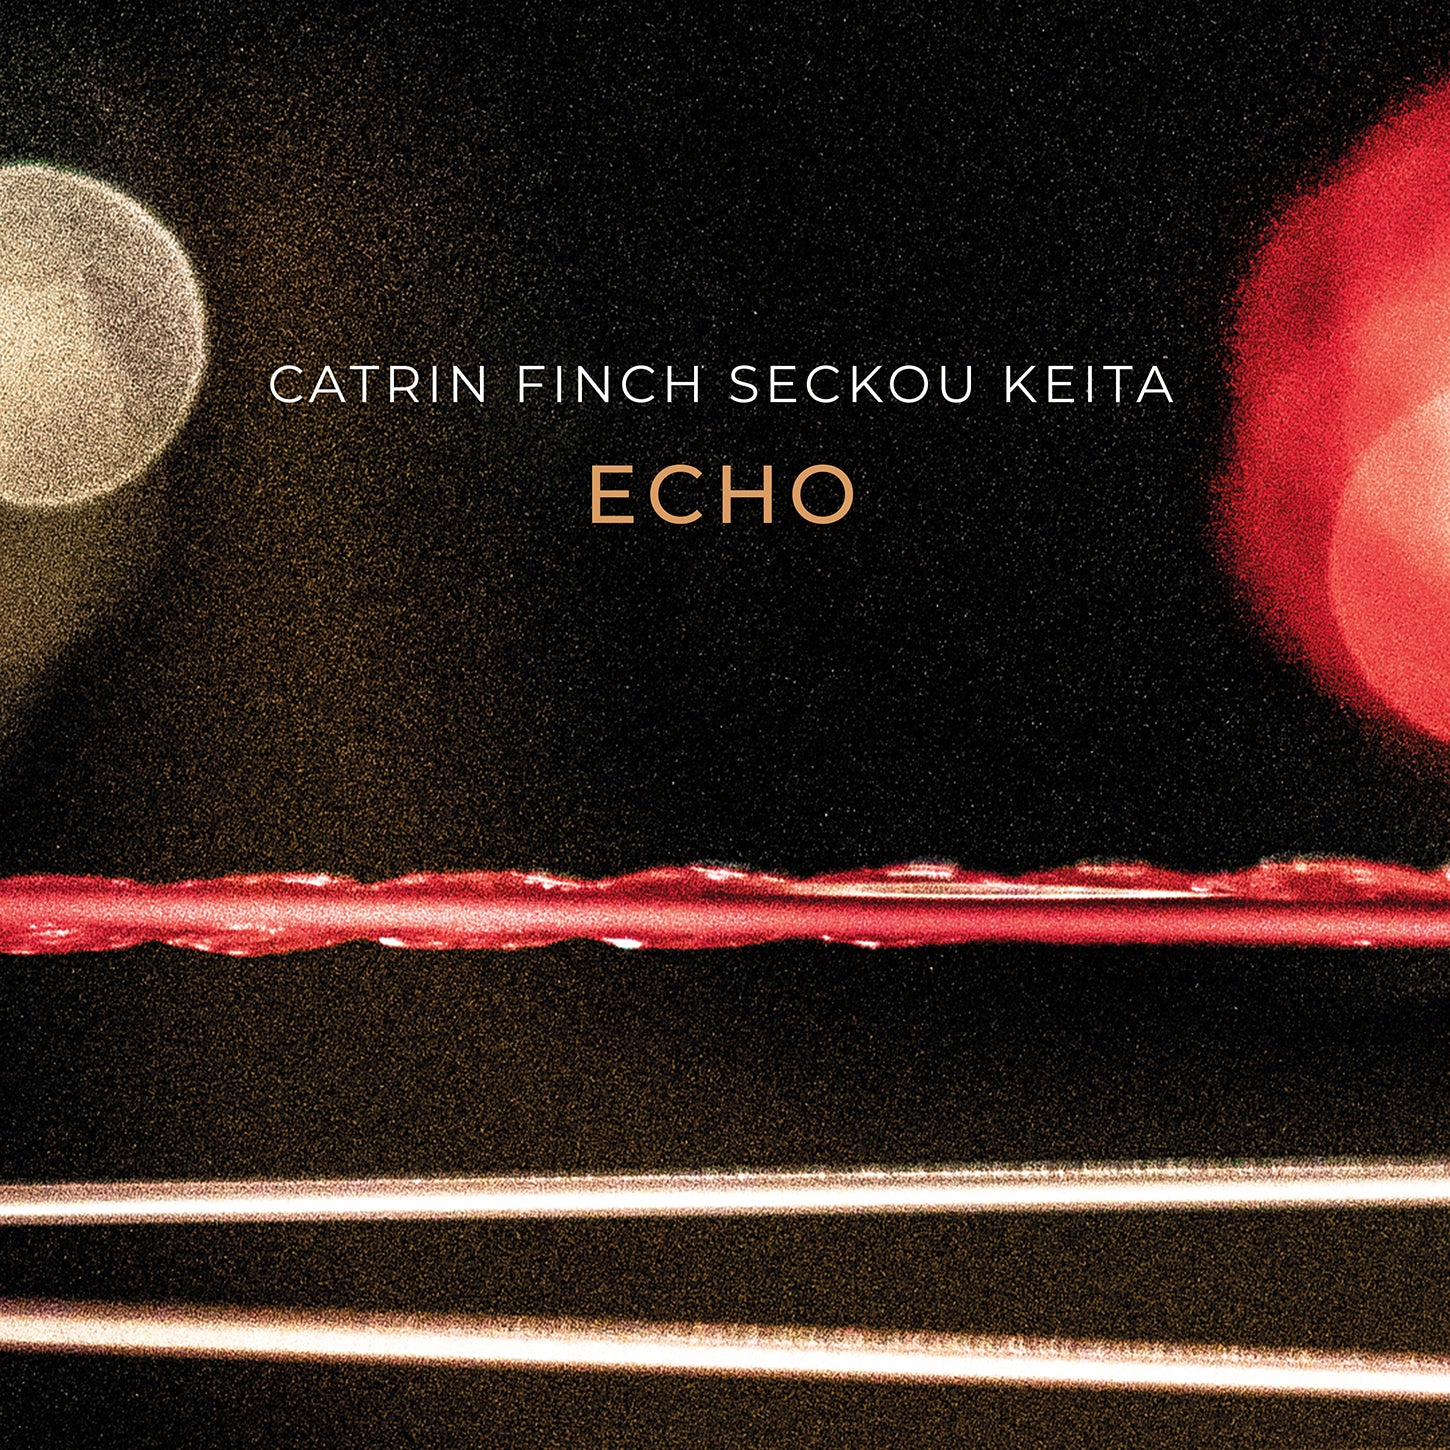 Catrin Finch & Seckou Keita: Echo - Music for Harp & Kora